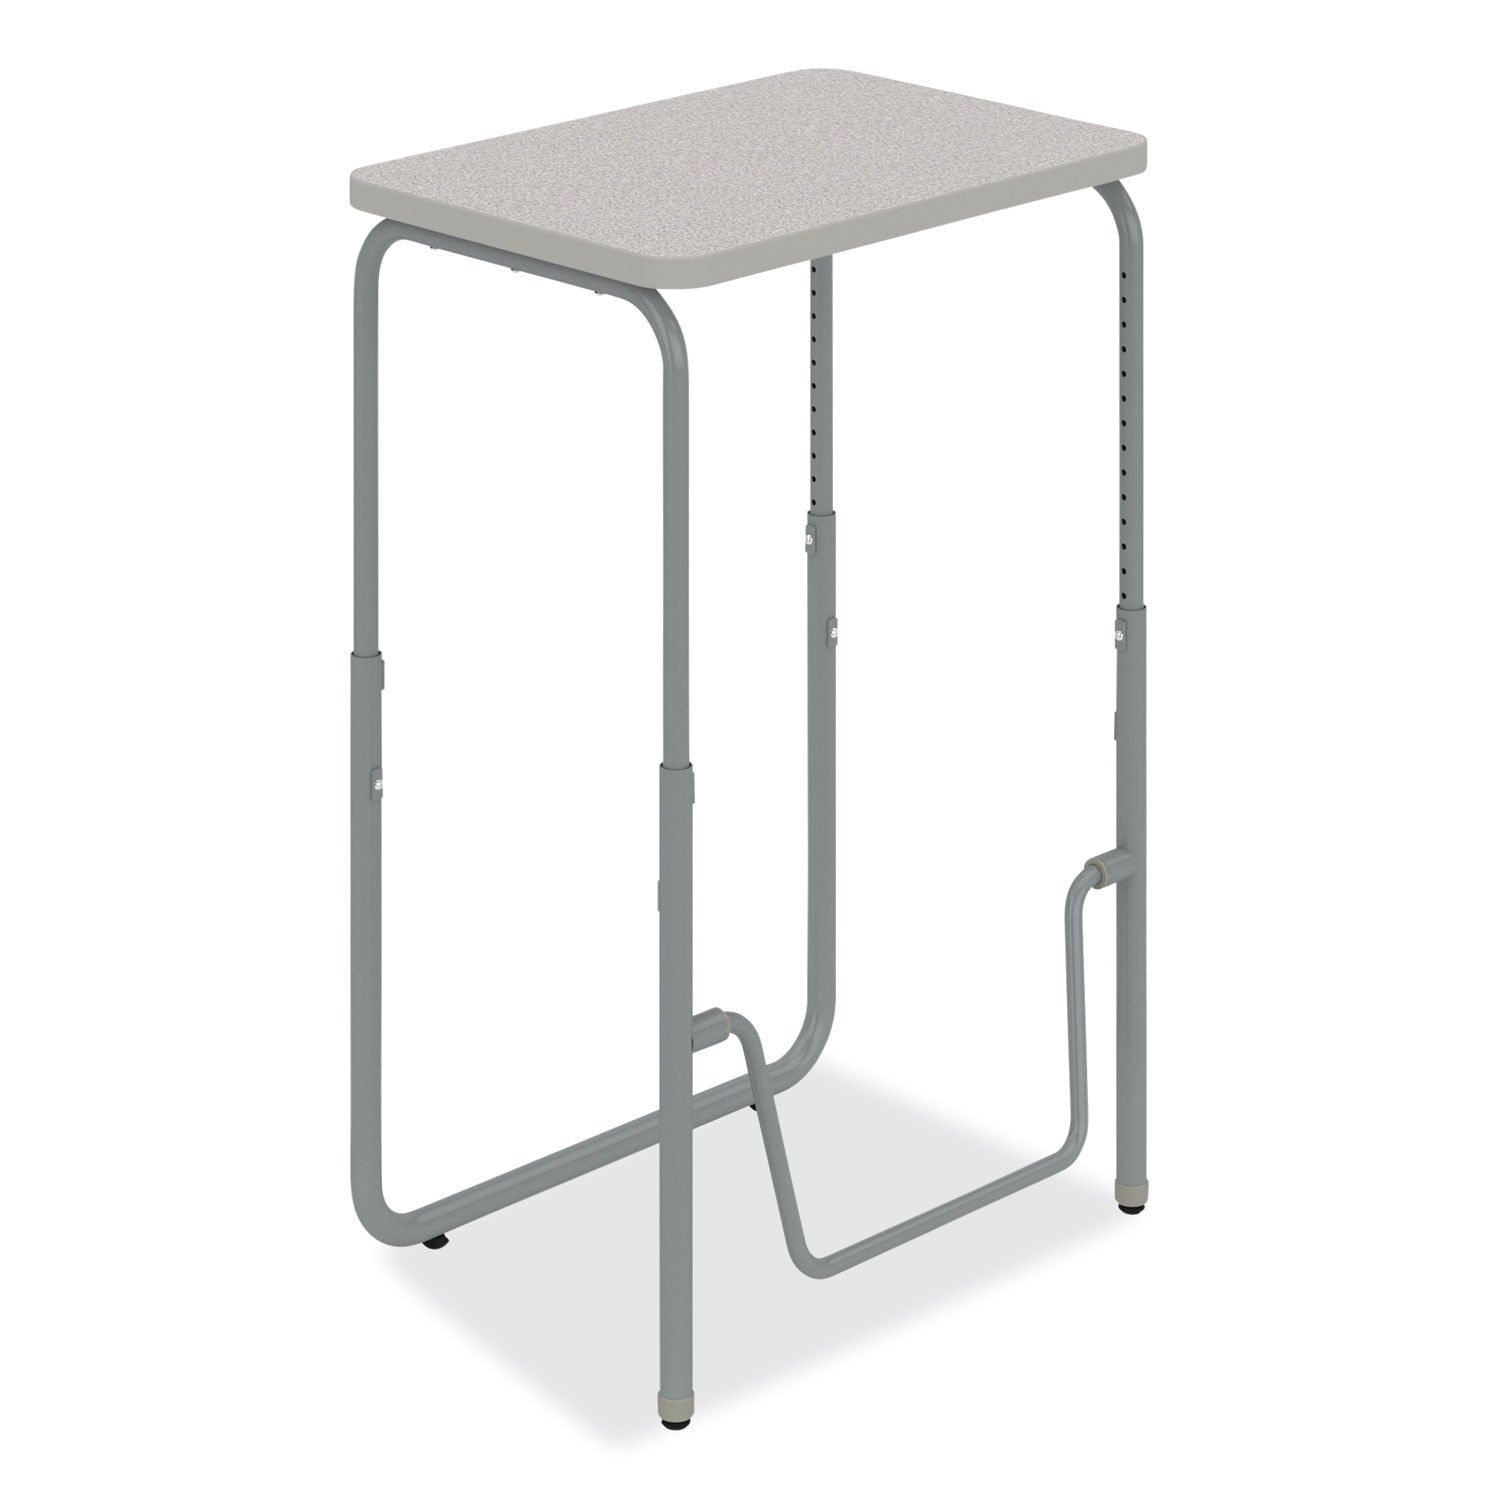 alphabetter-20-height-adjustable-student-desk-with-pendulum-bar-2775-x-1975-x-29-to-43-pebble-gray_saf1223gr - 1